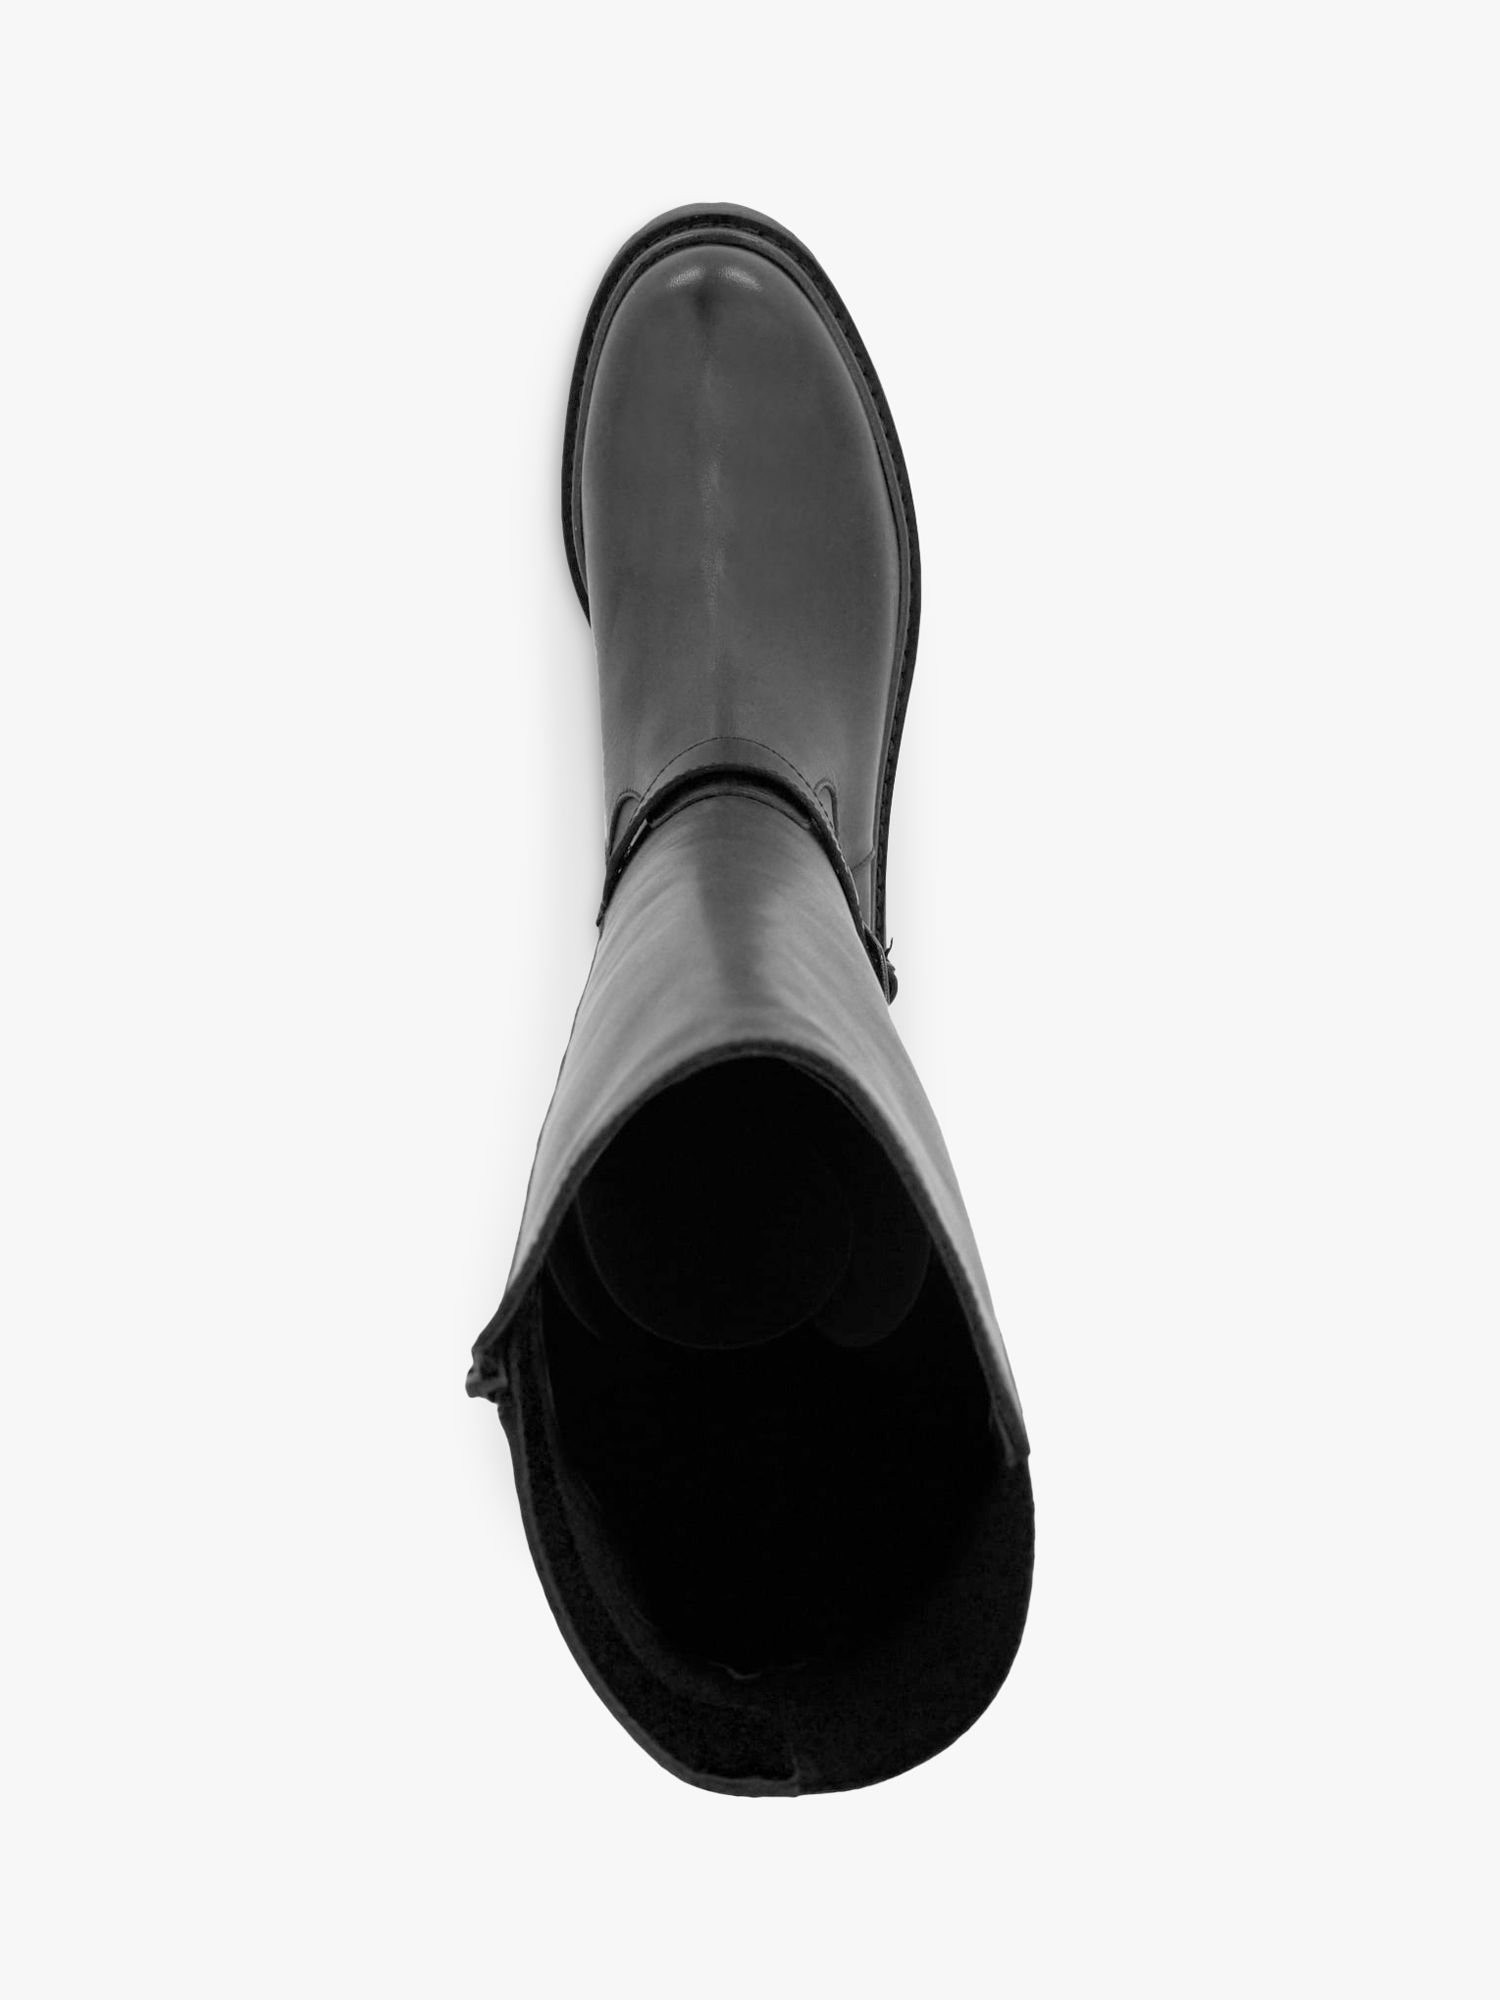 Dune Teller Leather Knee High Boots, Black, 4